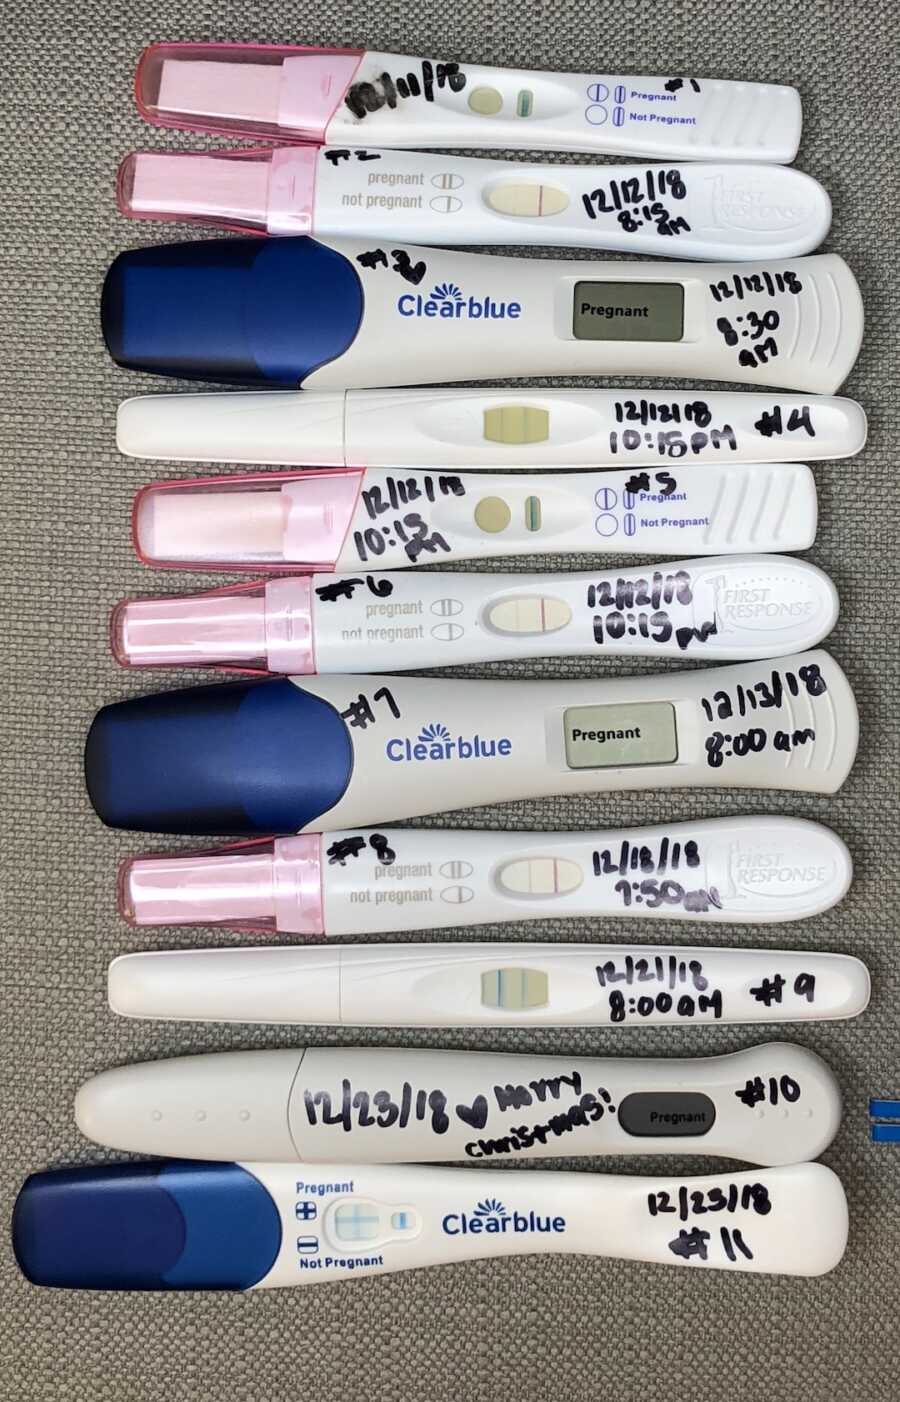 many positive pregnancy tests lined up together